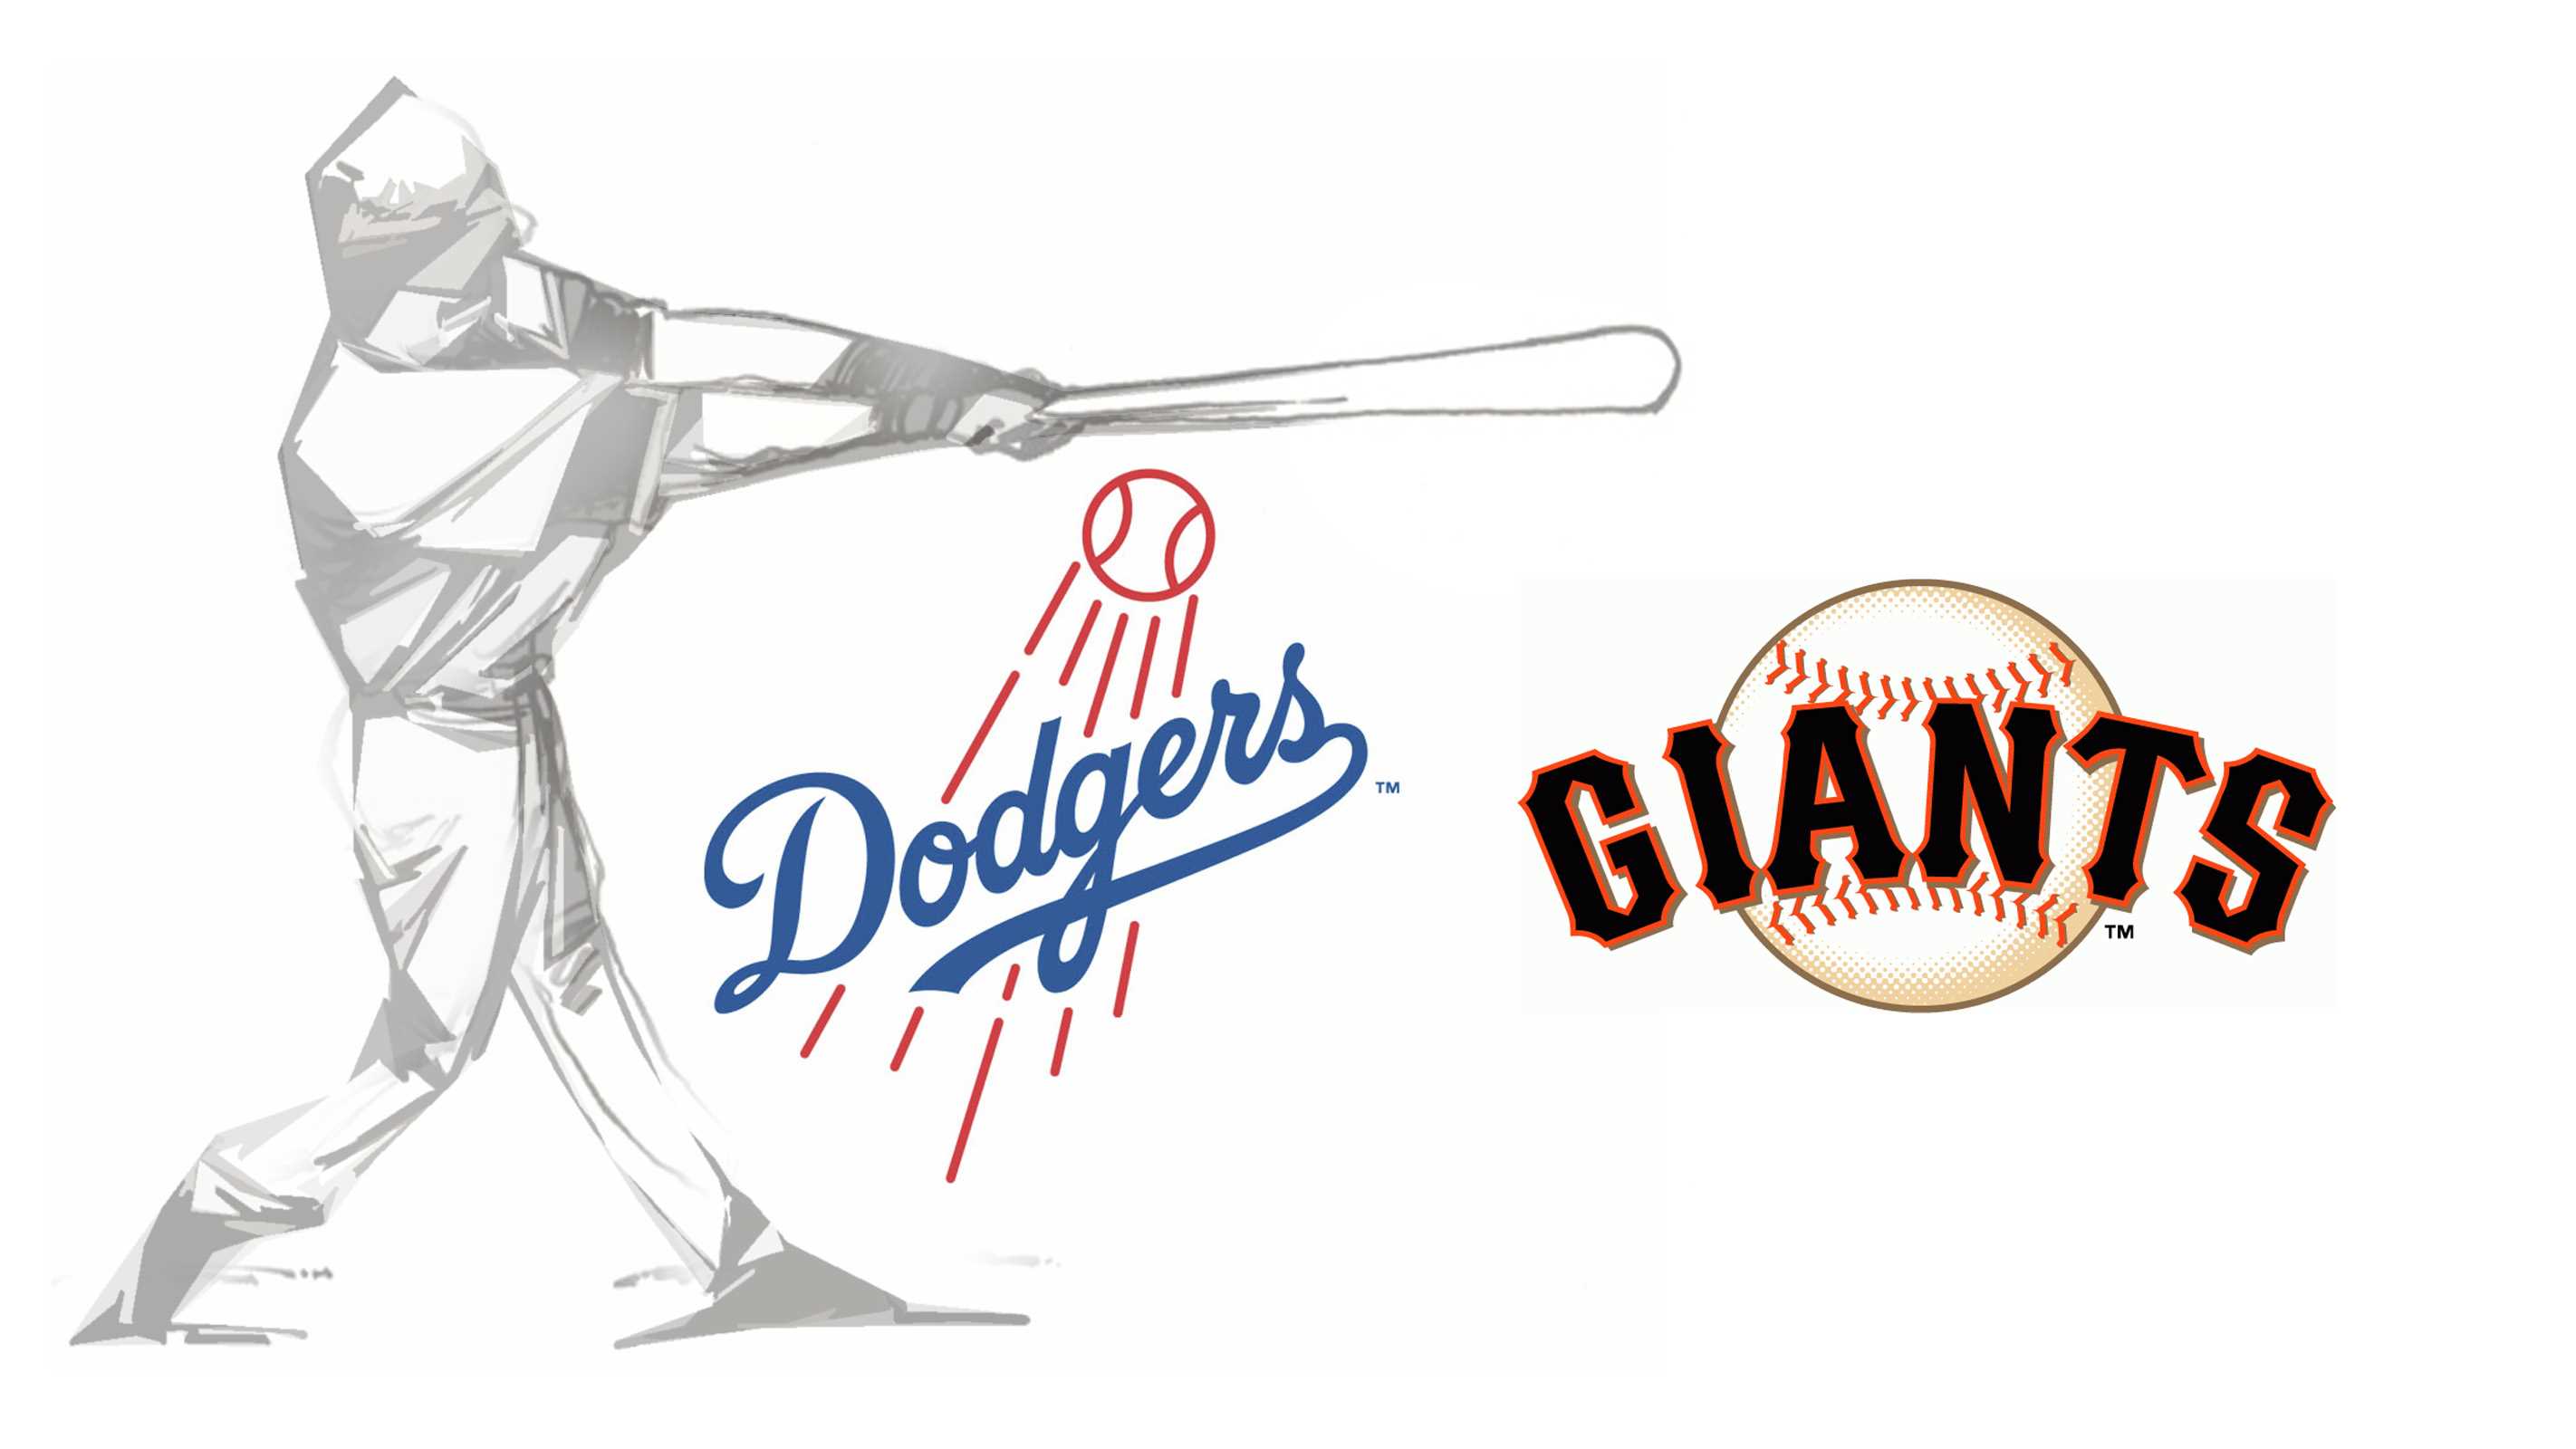 DodgersGiants rivalry which team do you prefer? netivist